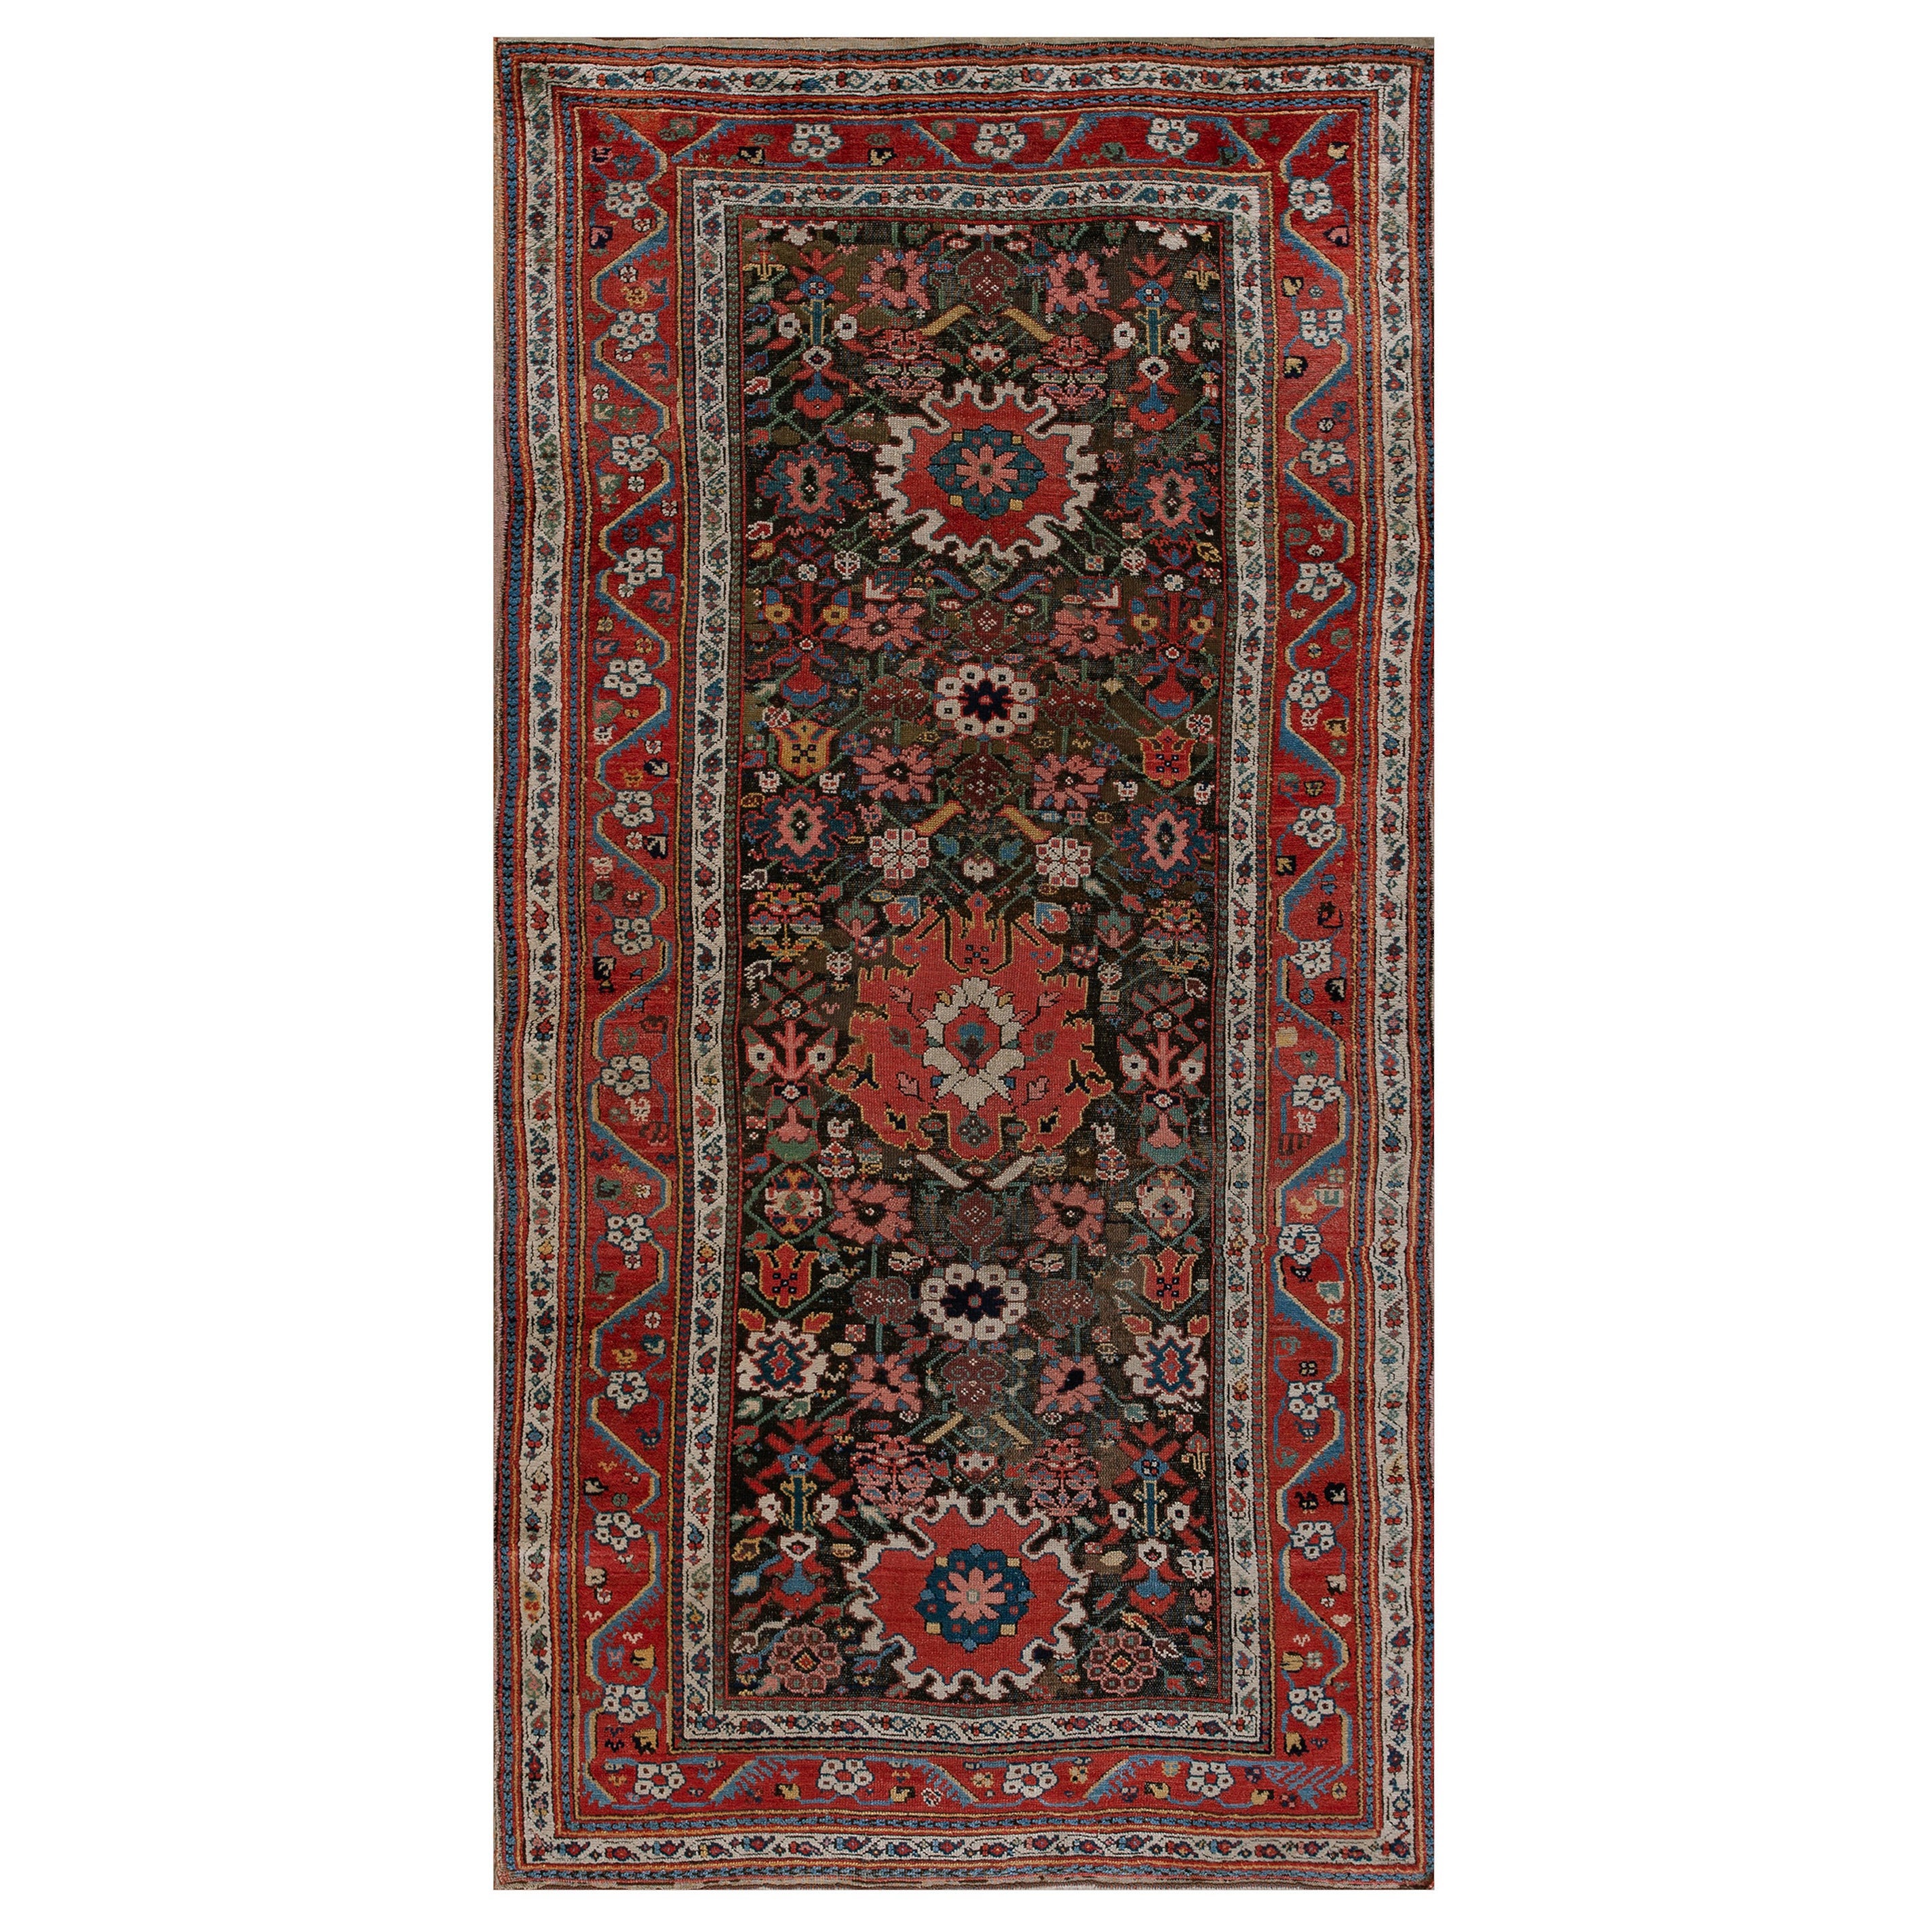 19th Century N.W. Persian Carpet 4' 6'' x9' 1'' 